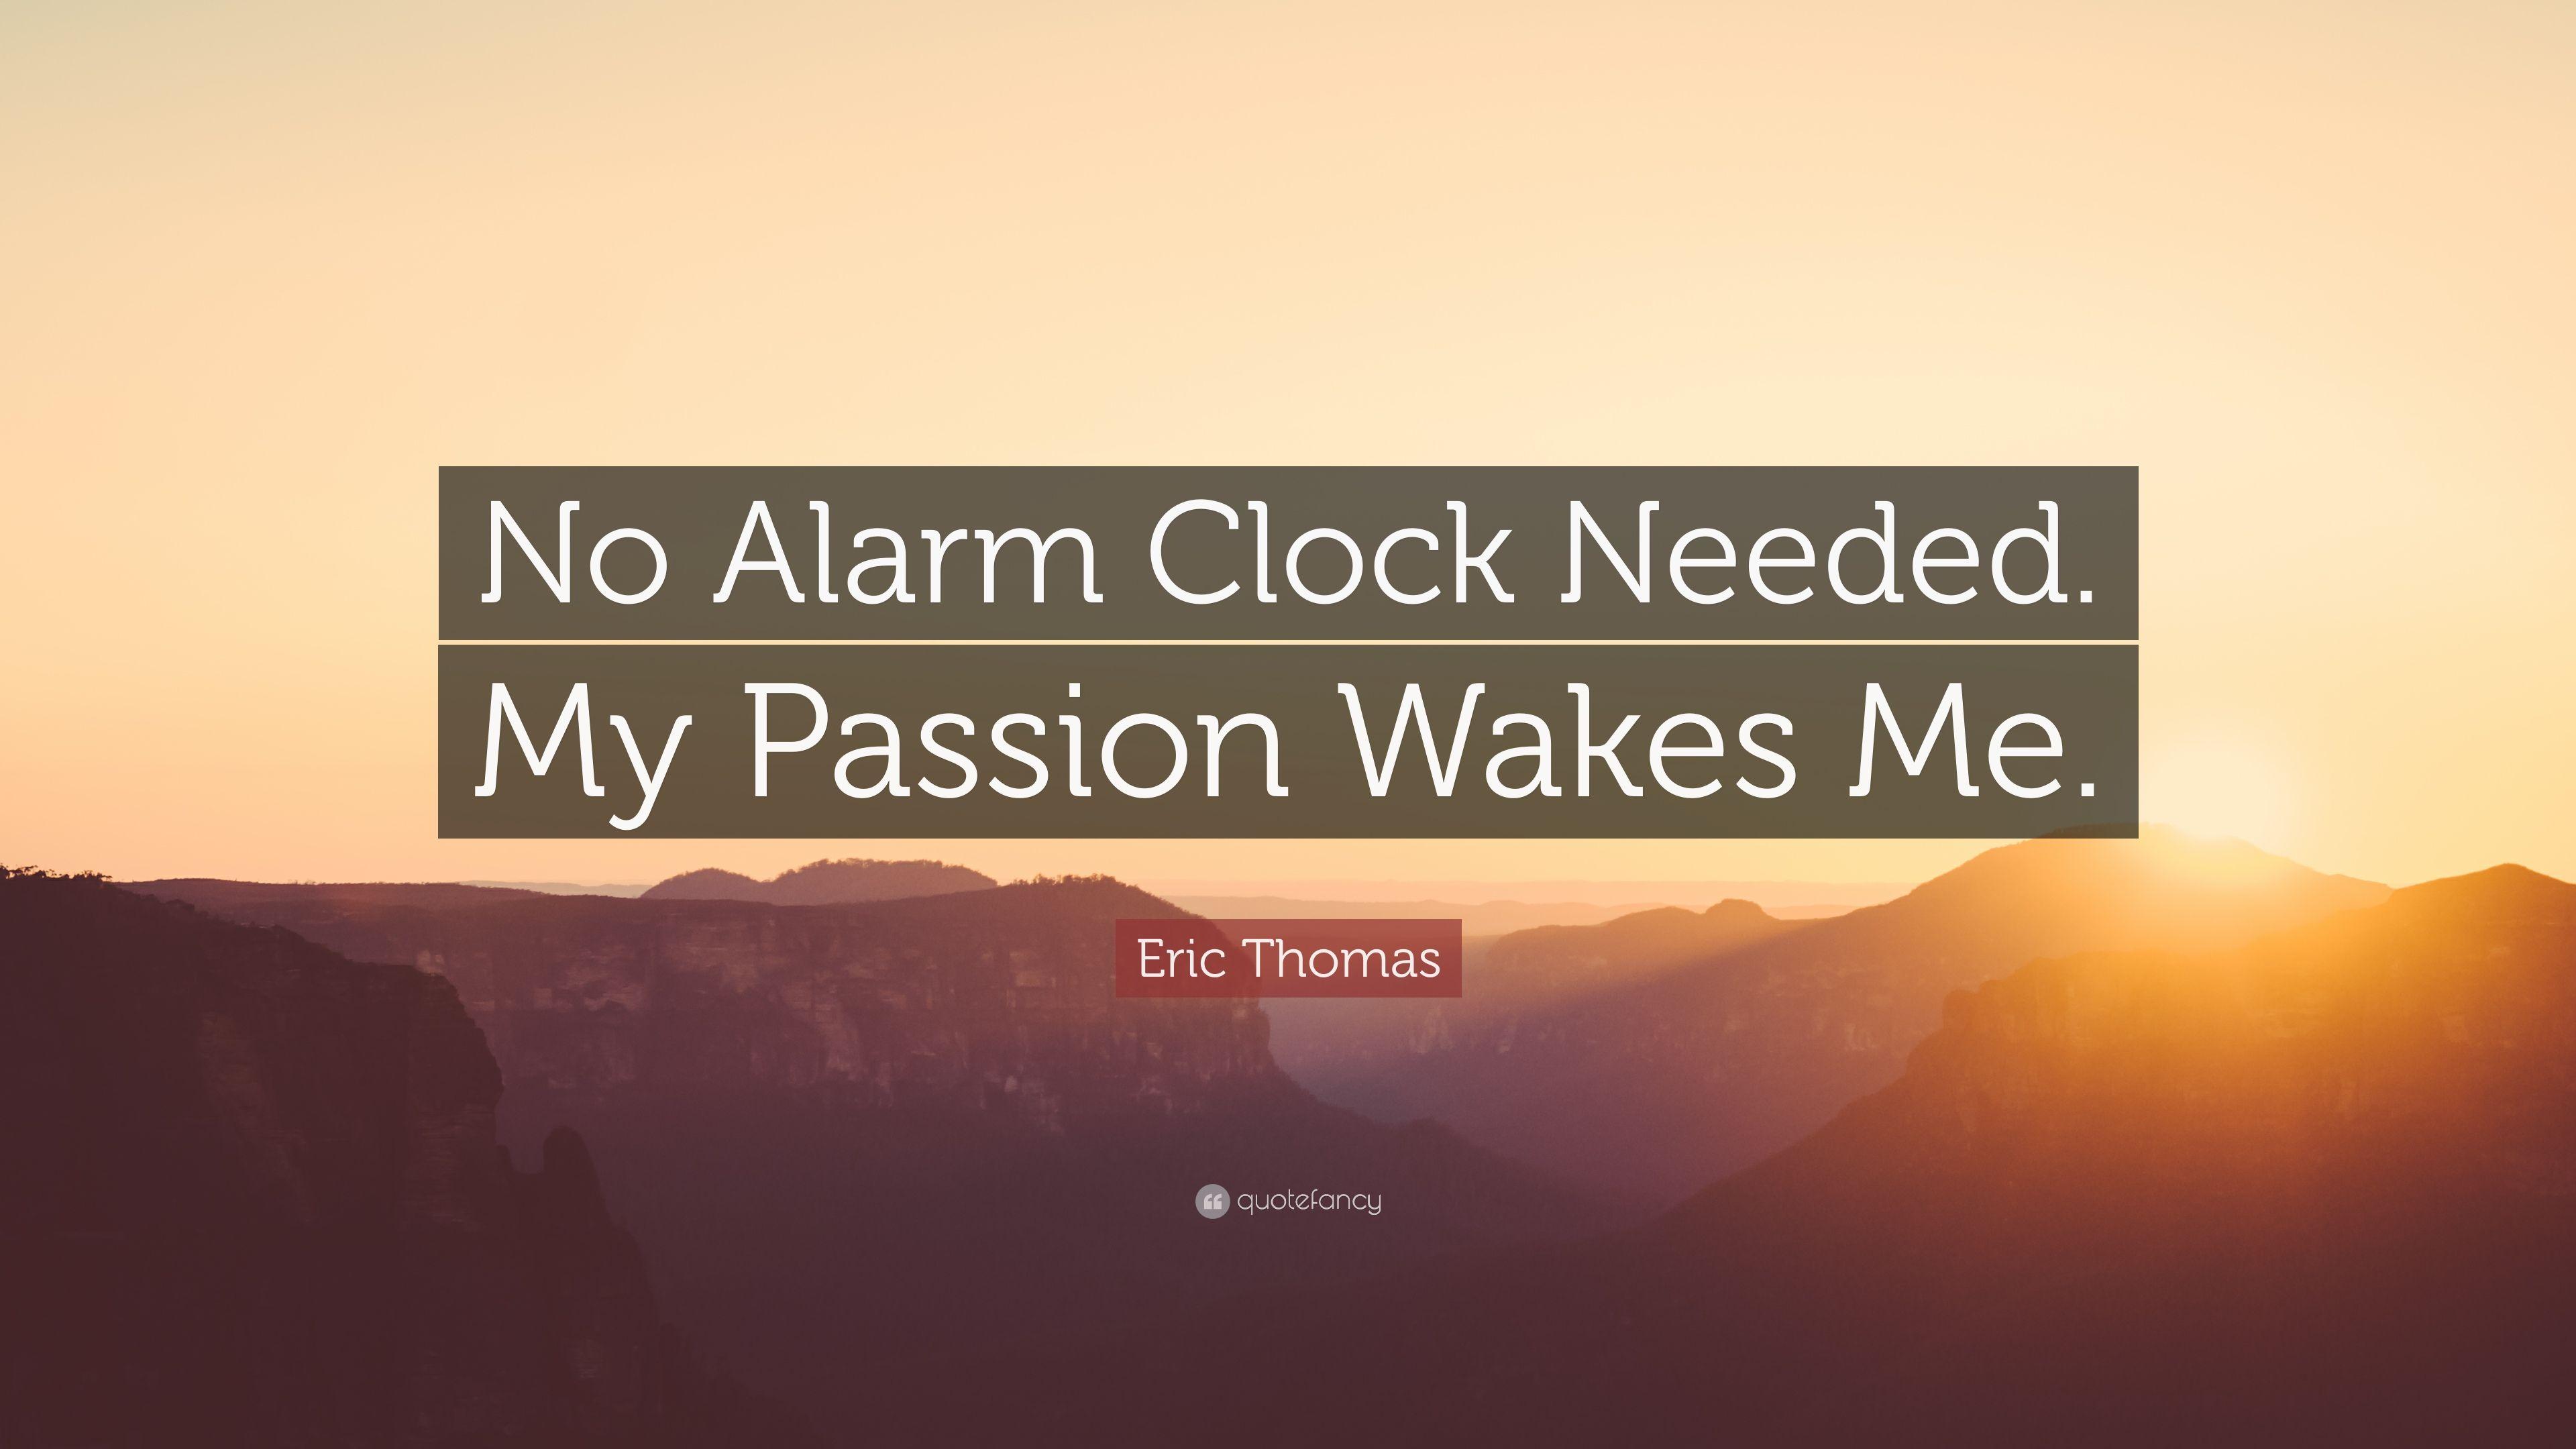 Eric Thomas Quote: “No Alarm Clock Needed. My Passion Wakes Me.” 12